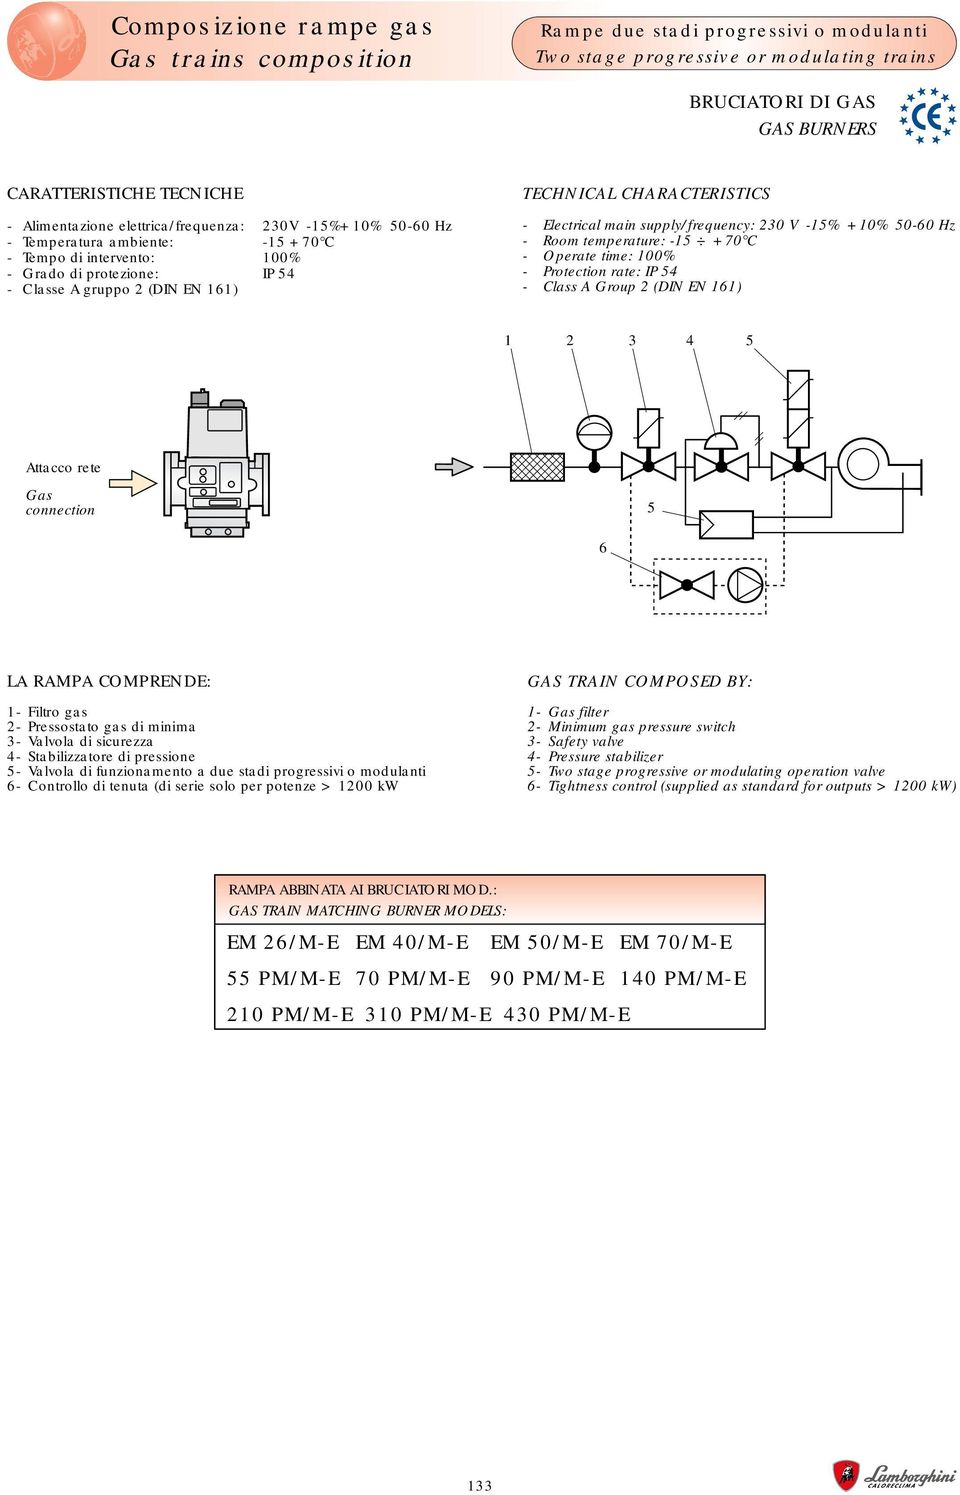 (di serie solo per potenze > 1200 kw 1- filter 5- Two stage progressive or modulating operation valve 6- Tightness control (supplied